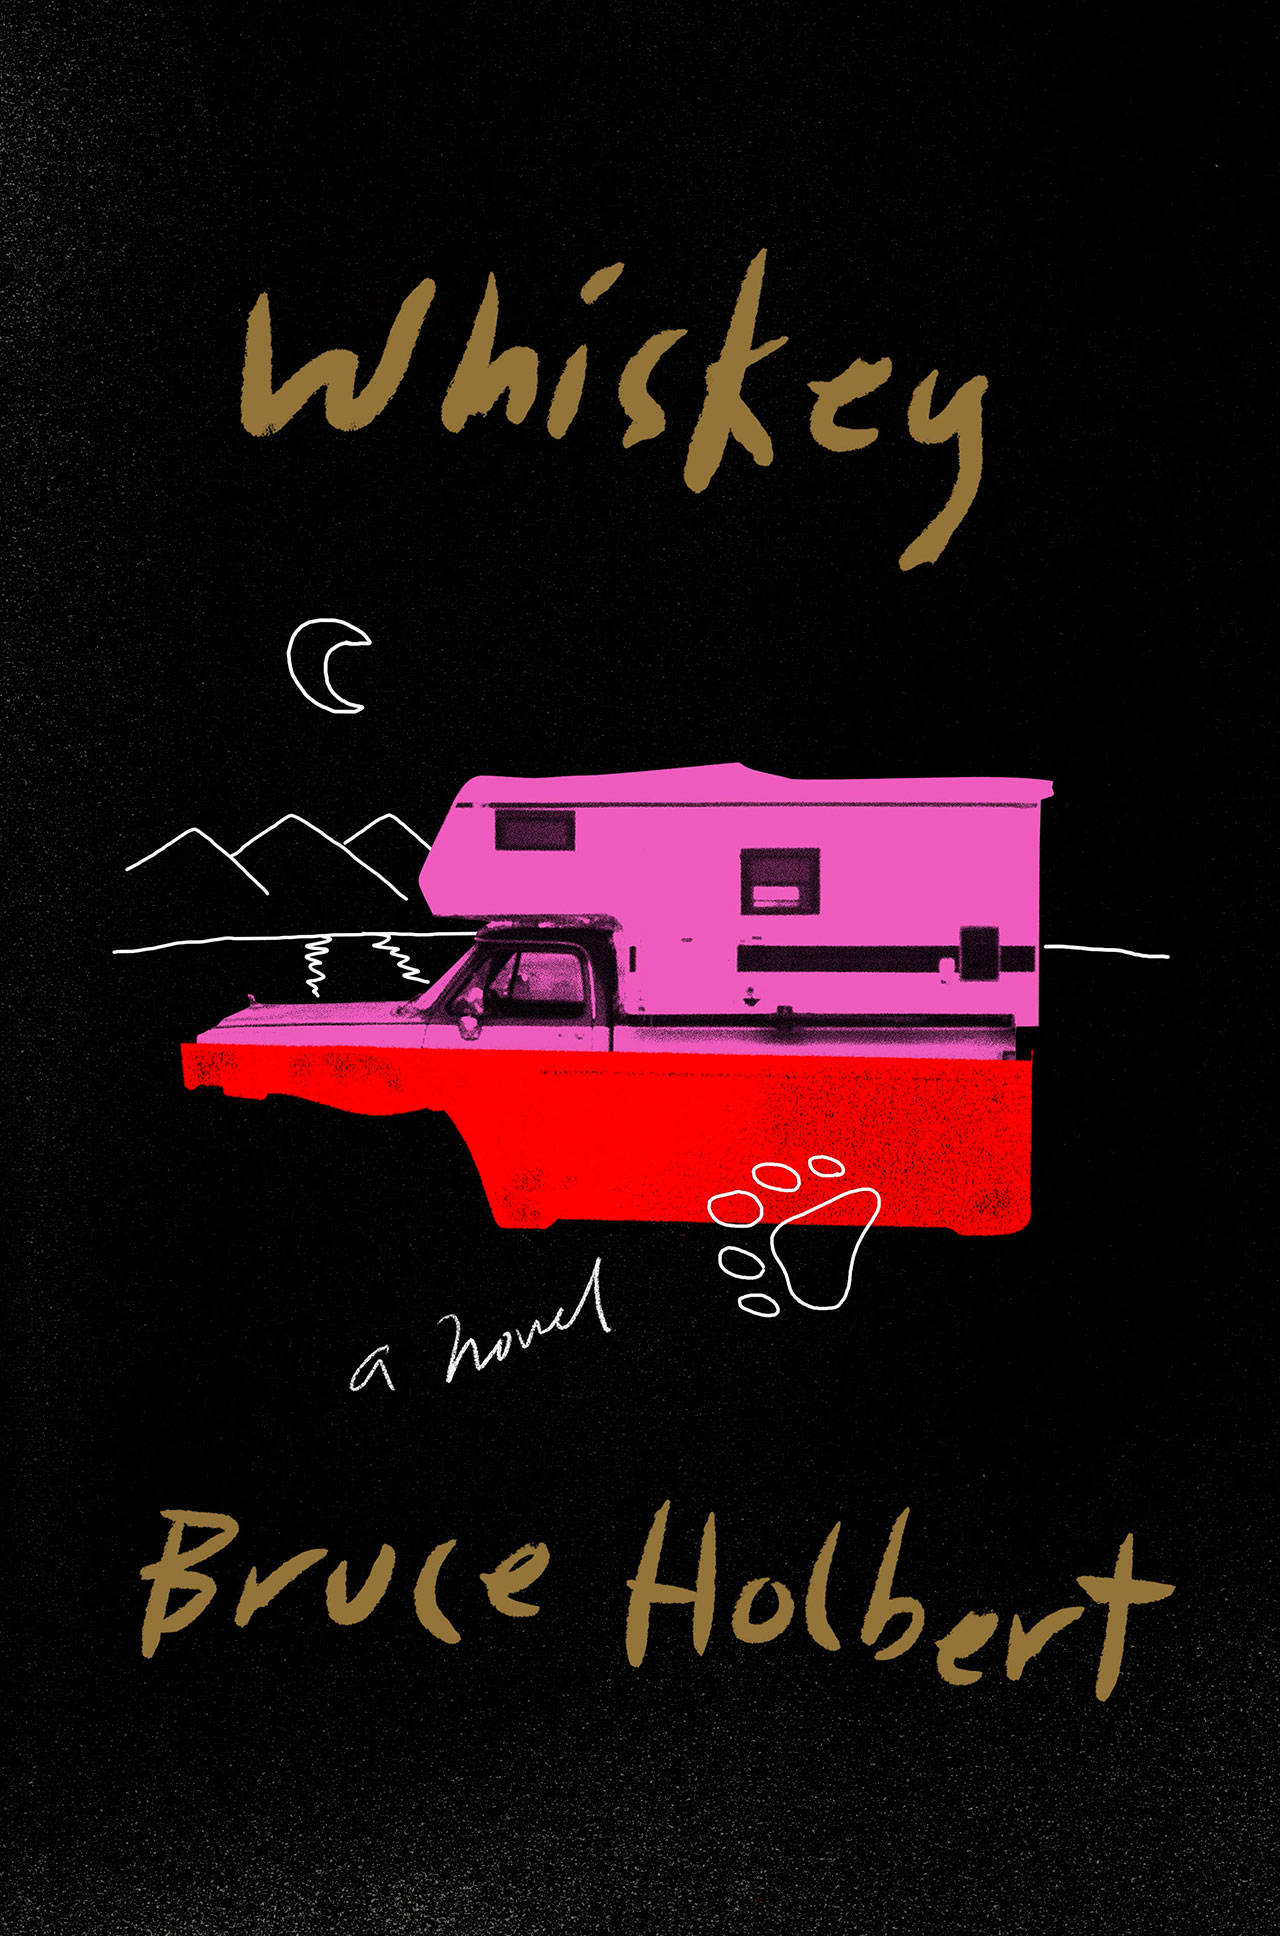 Spokane novelist to talk ‘Whiskey’ at Eagle Harbor